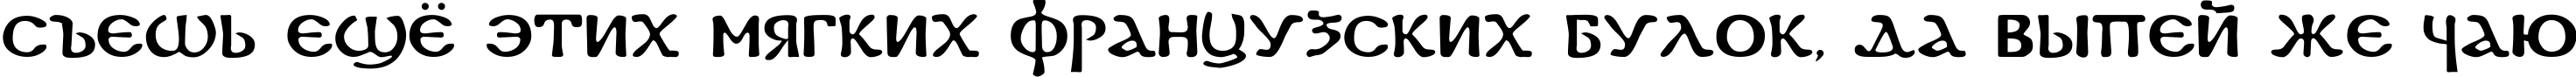 Пример написания шрифтом DS Coptic текста на русском